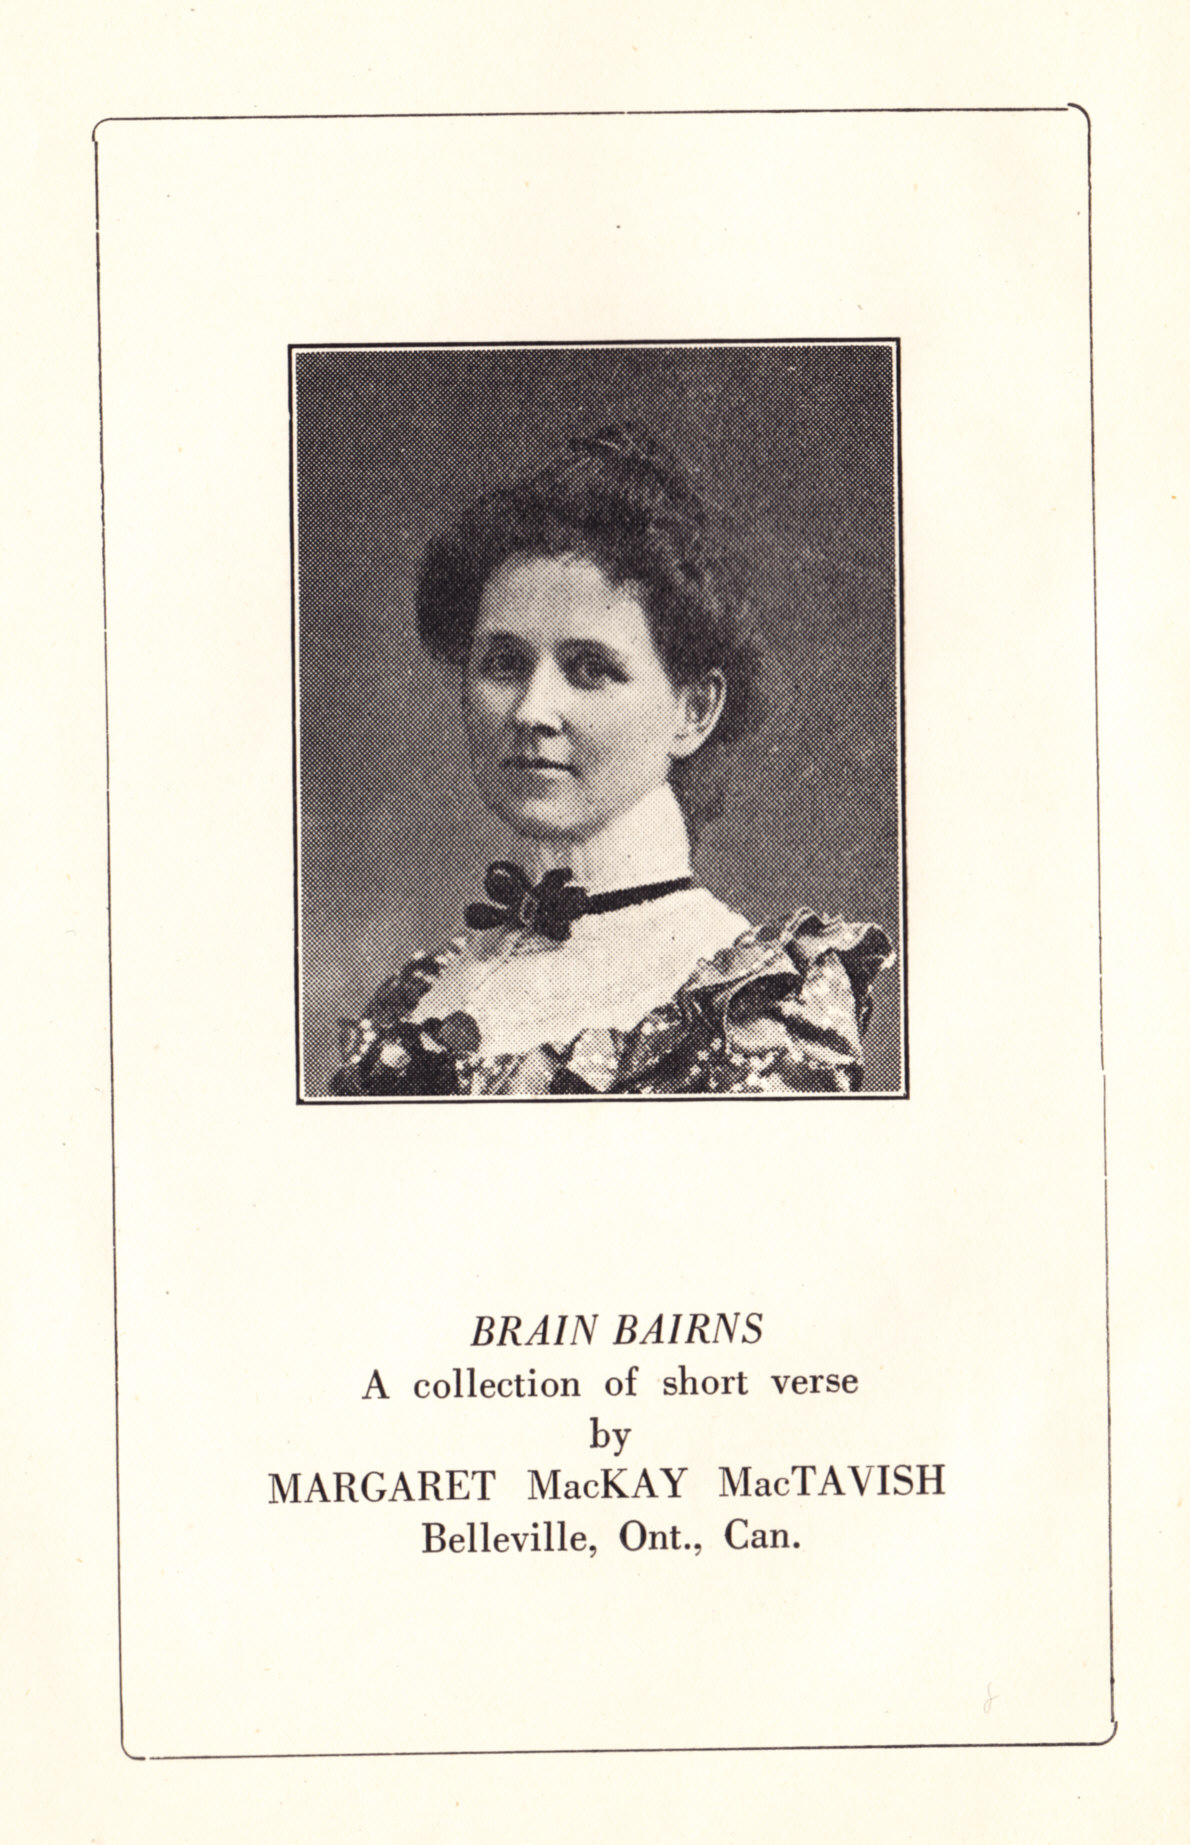 Photograph of Margaret MacKay MacTavish on the frontispiece of a book called Brain Bairns